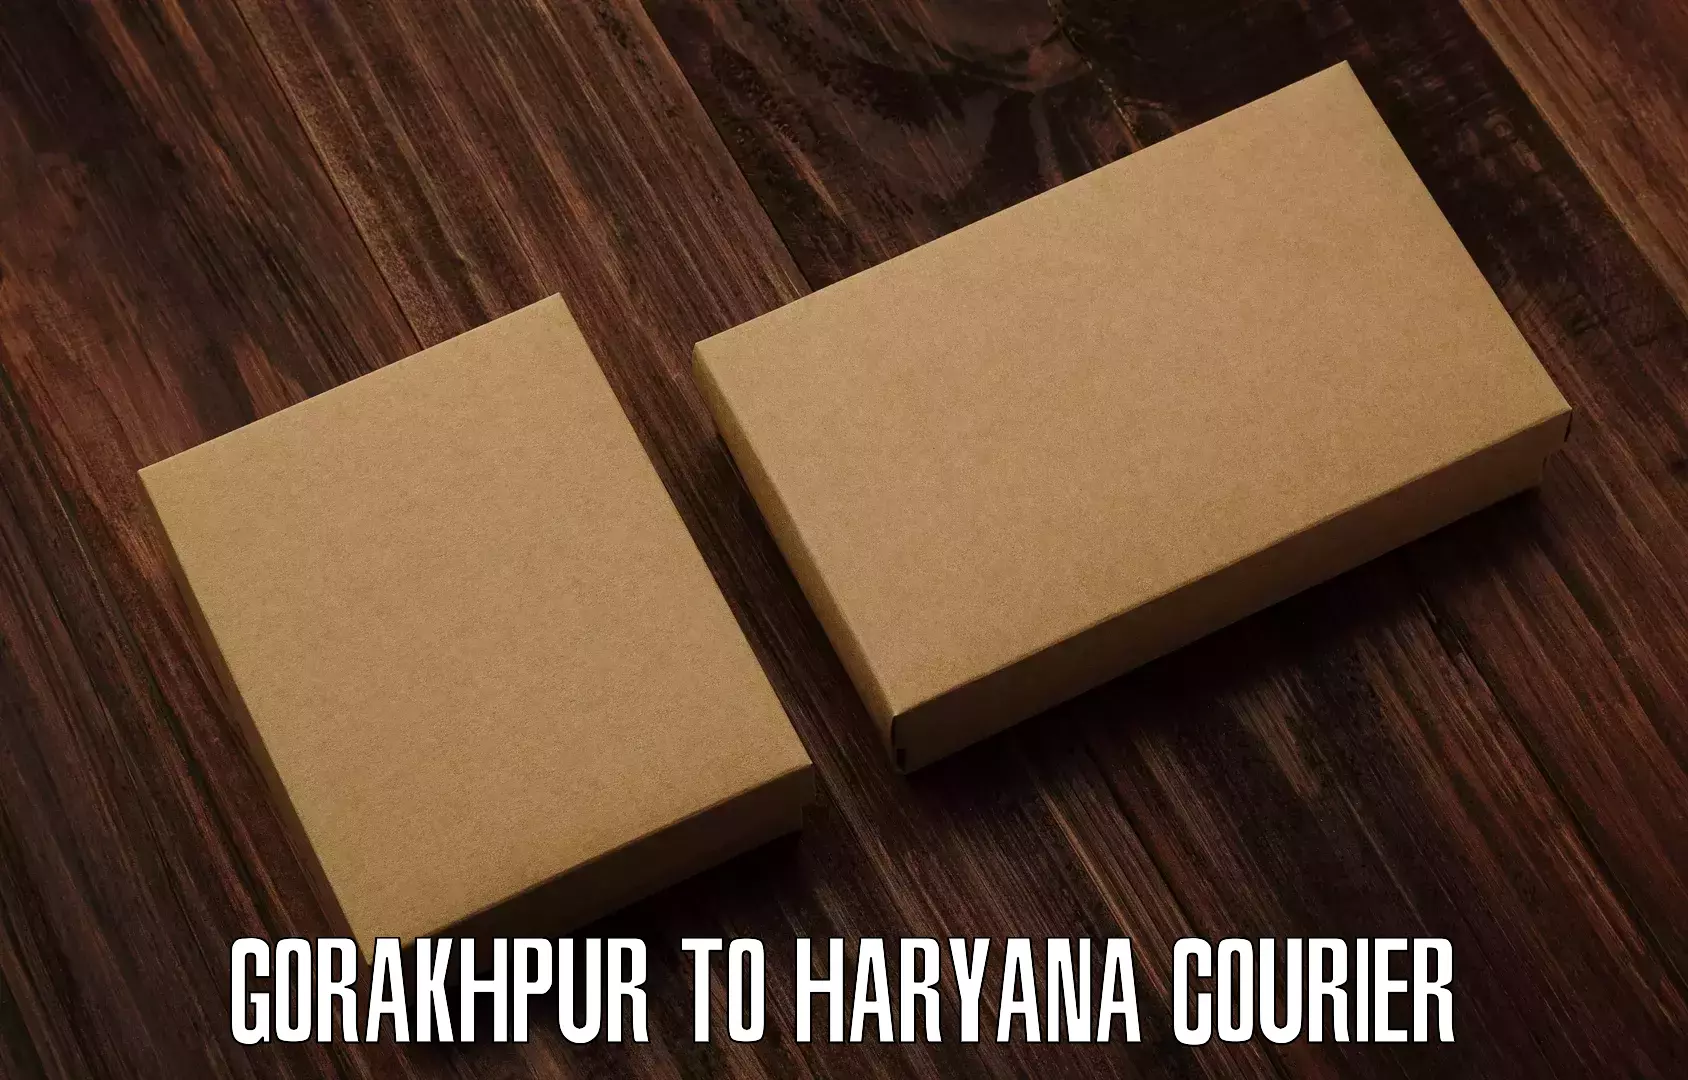 Reliable delivery network Gorakhpur to Gohana